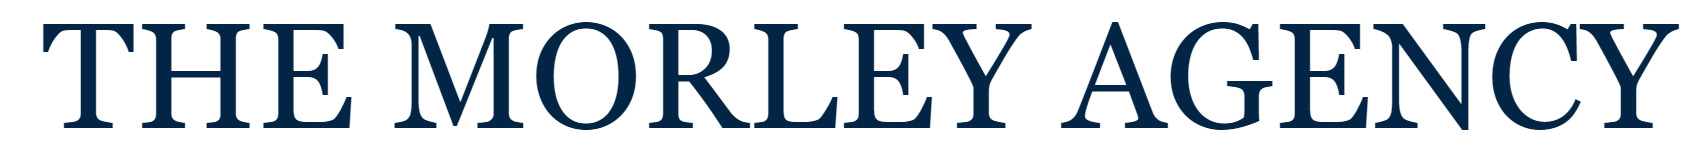 Morley Agency logo